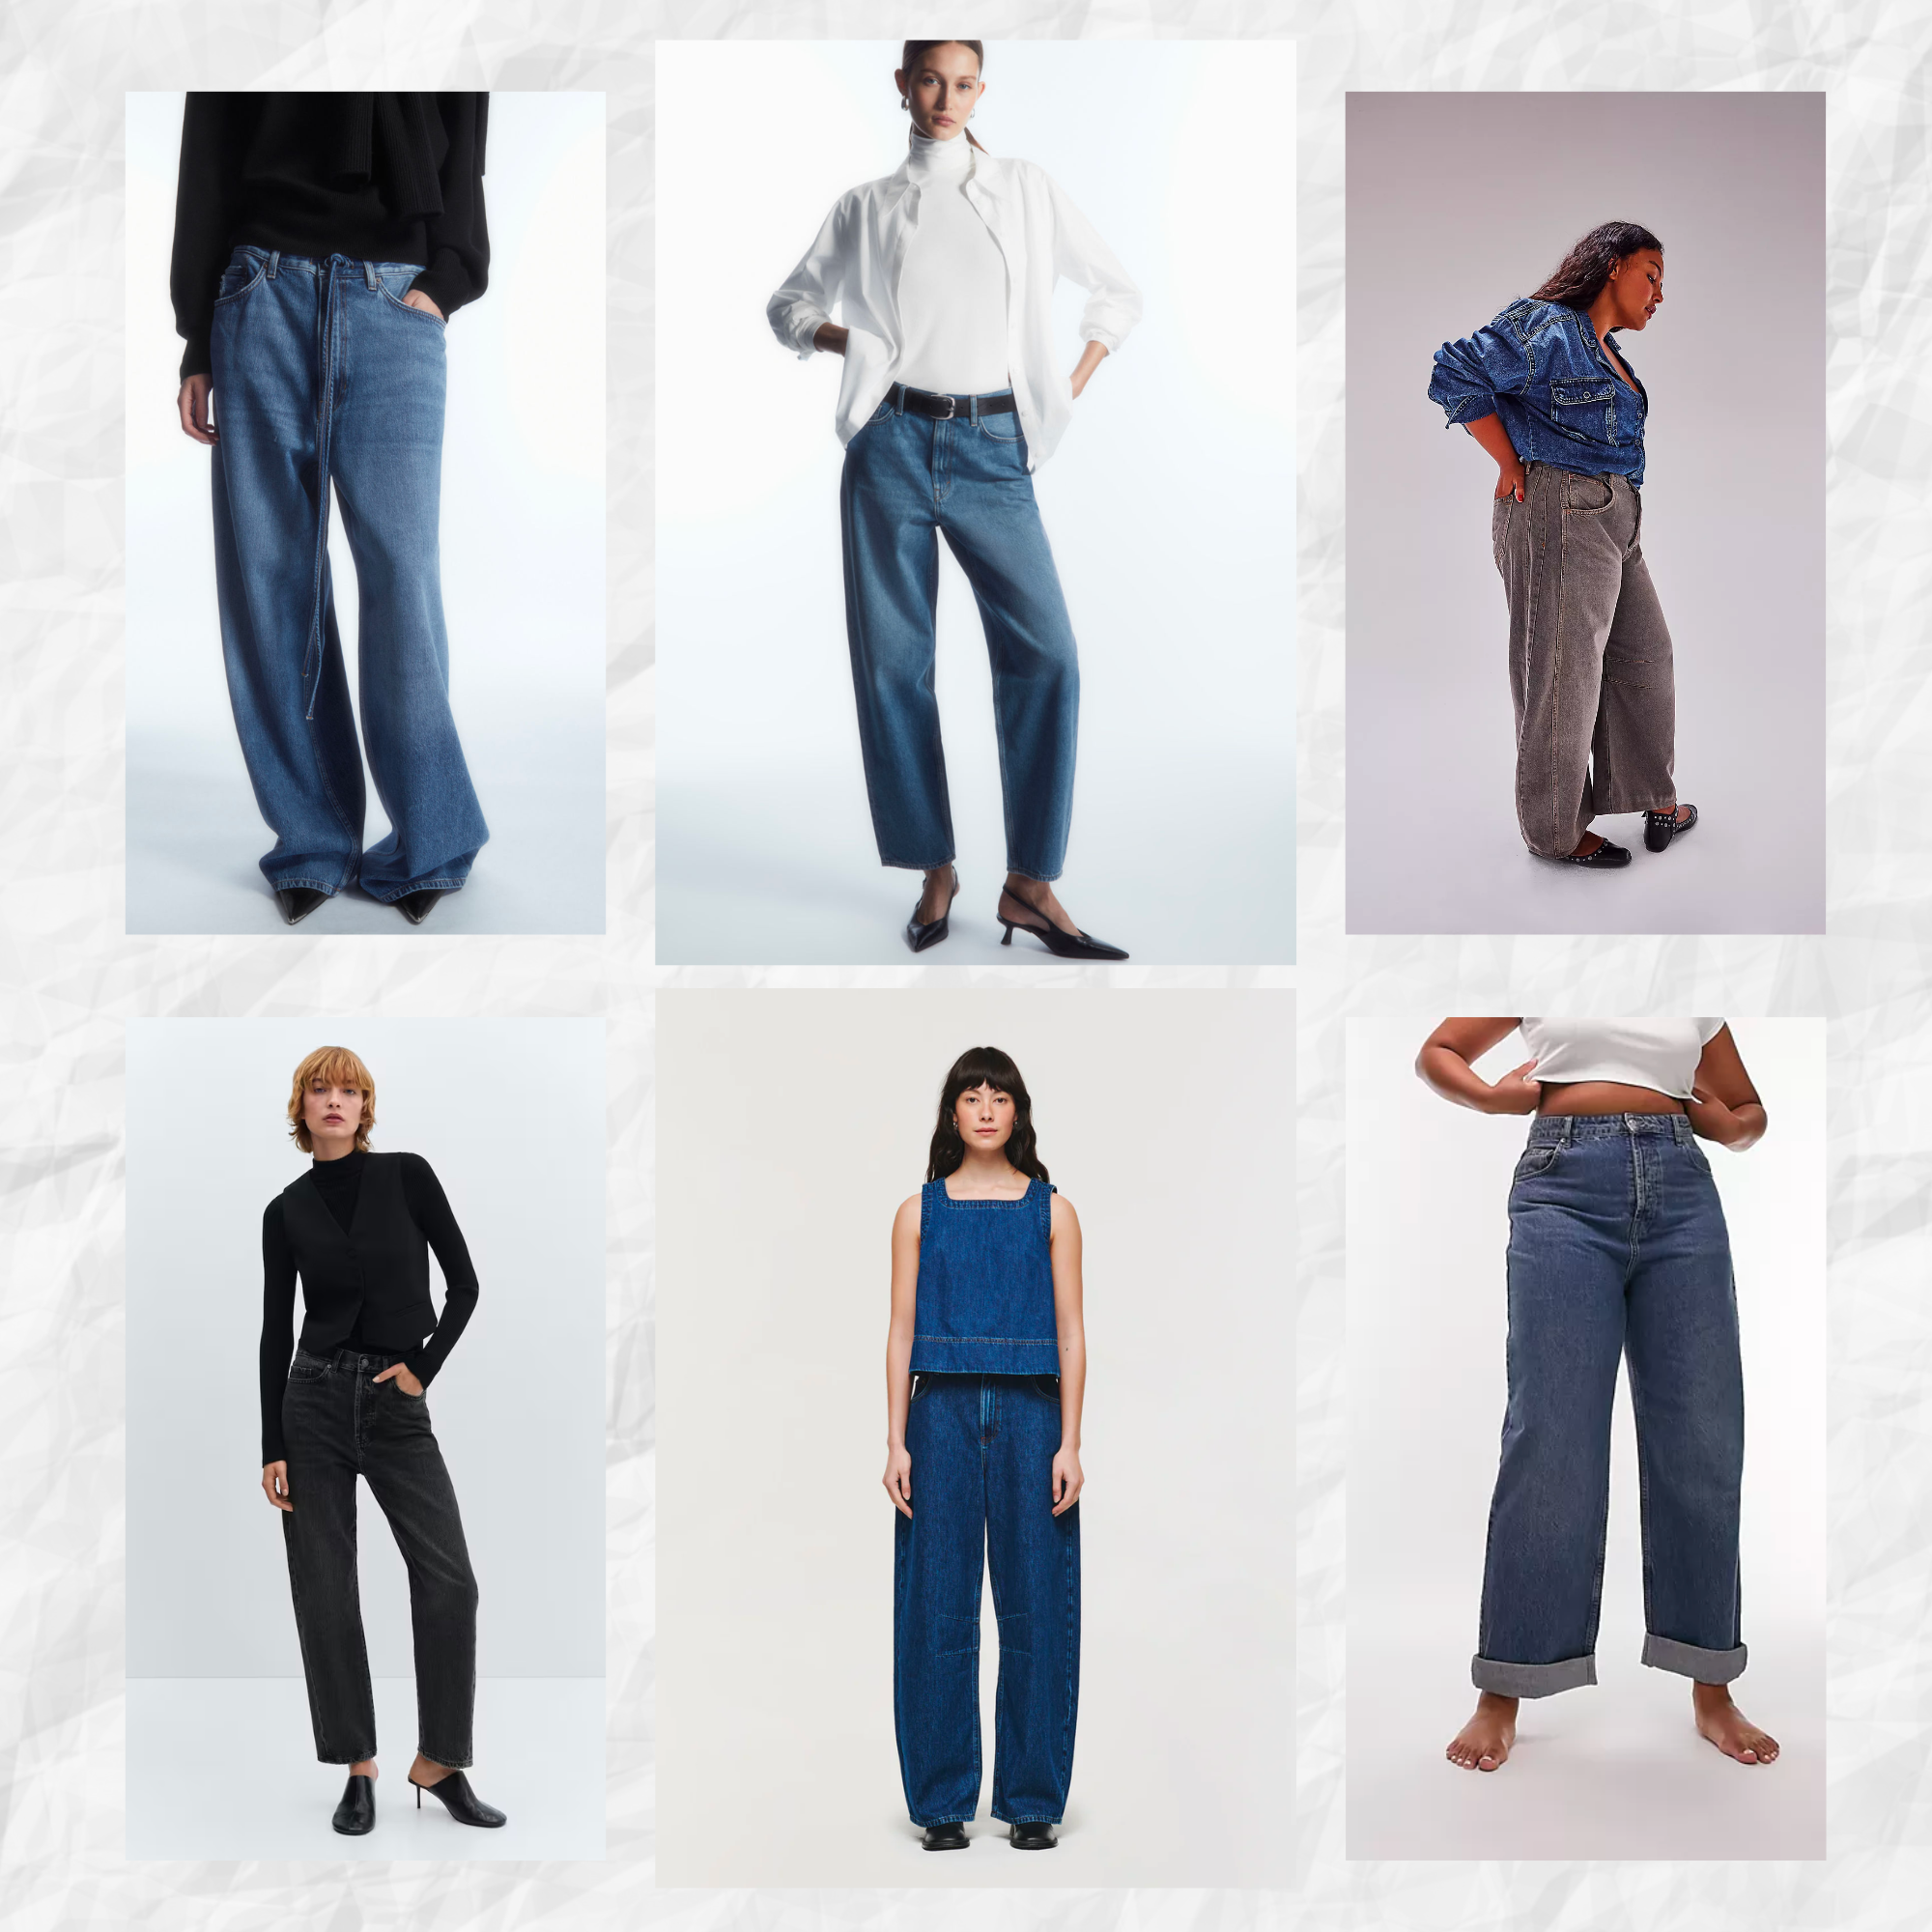 Blue 90s organic-cotton high-waisted wide-leg jeans, Raey